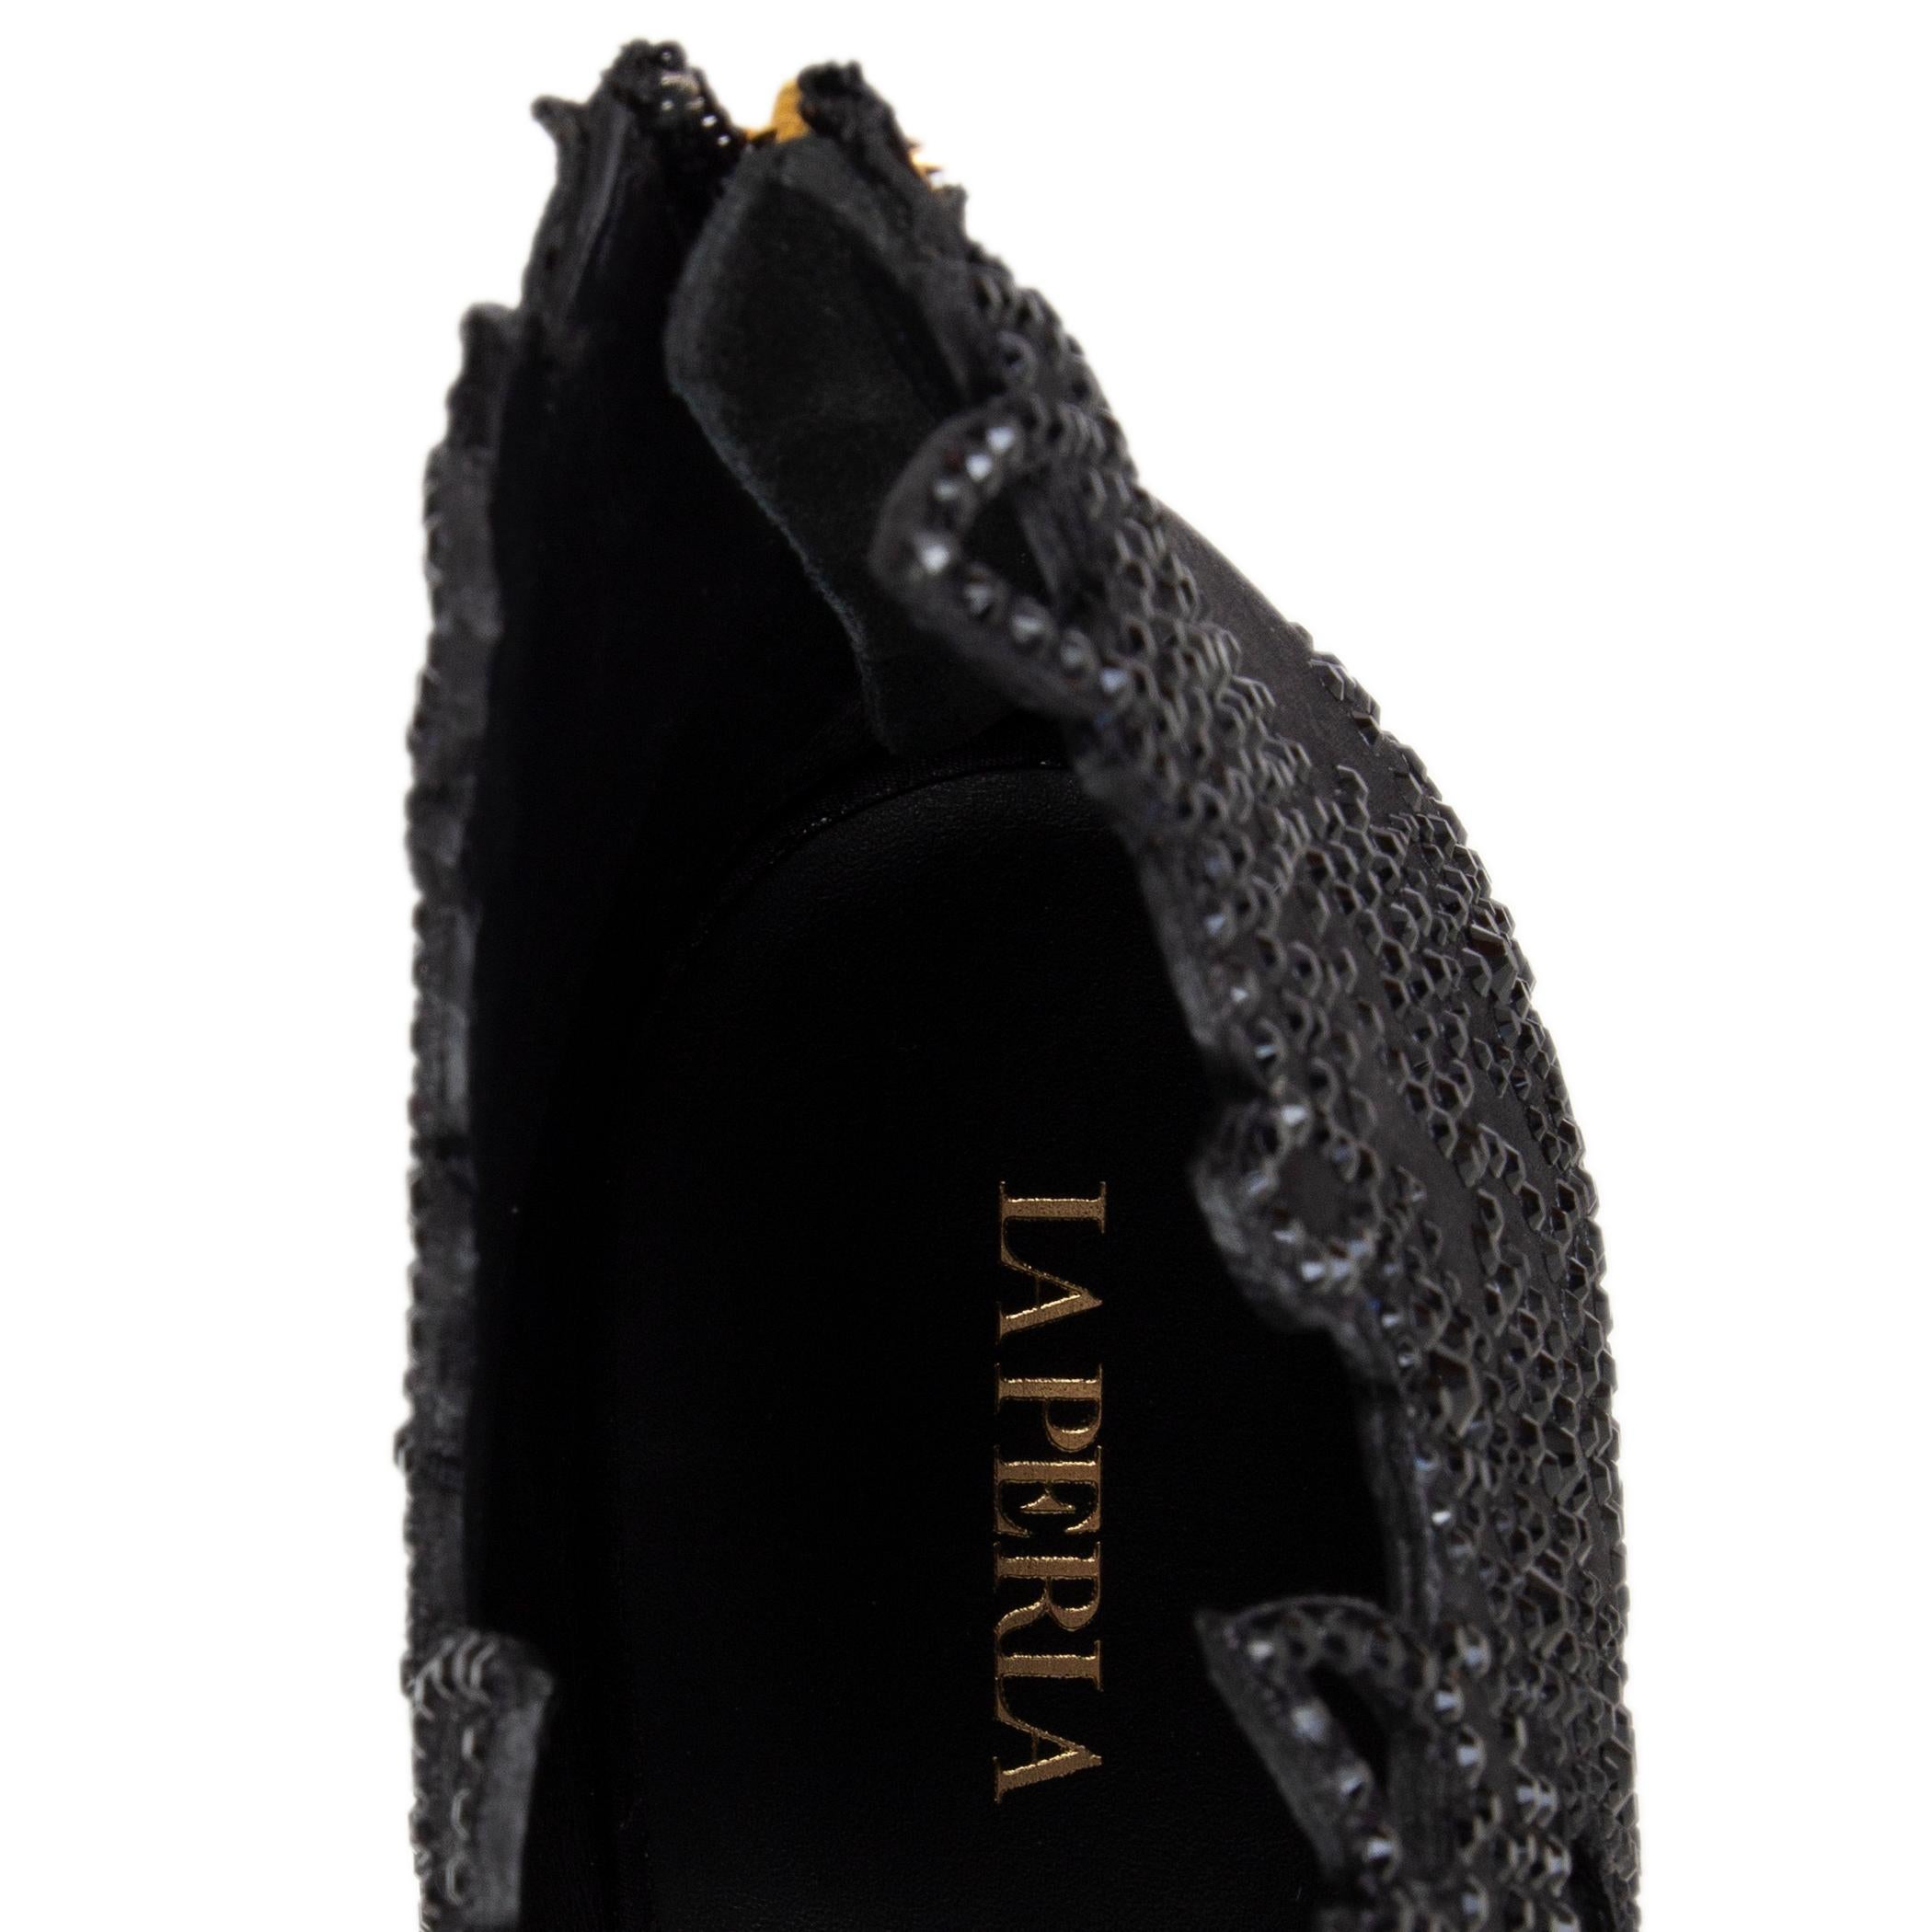 Black GIUSEPPE ZANOTTI x LA PERLA black RHINESTONE SATIN Platform Sandals Shoes 38